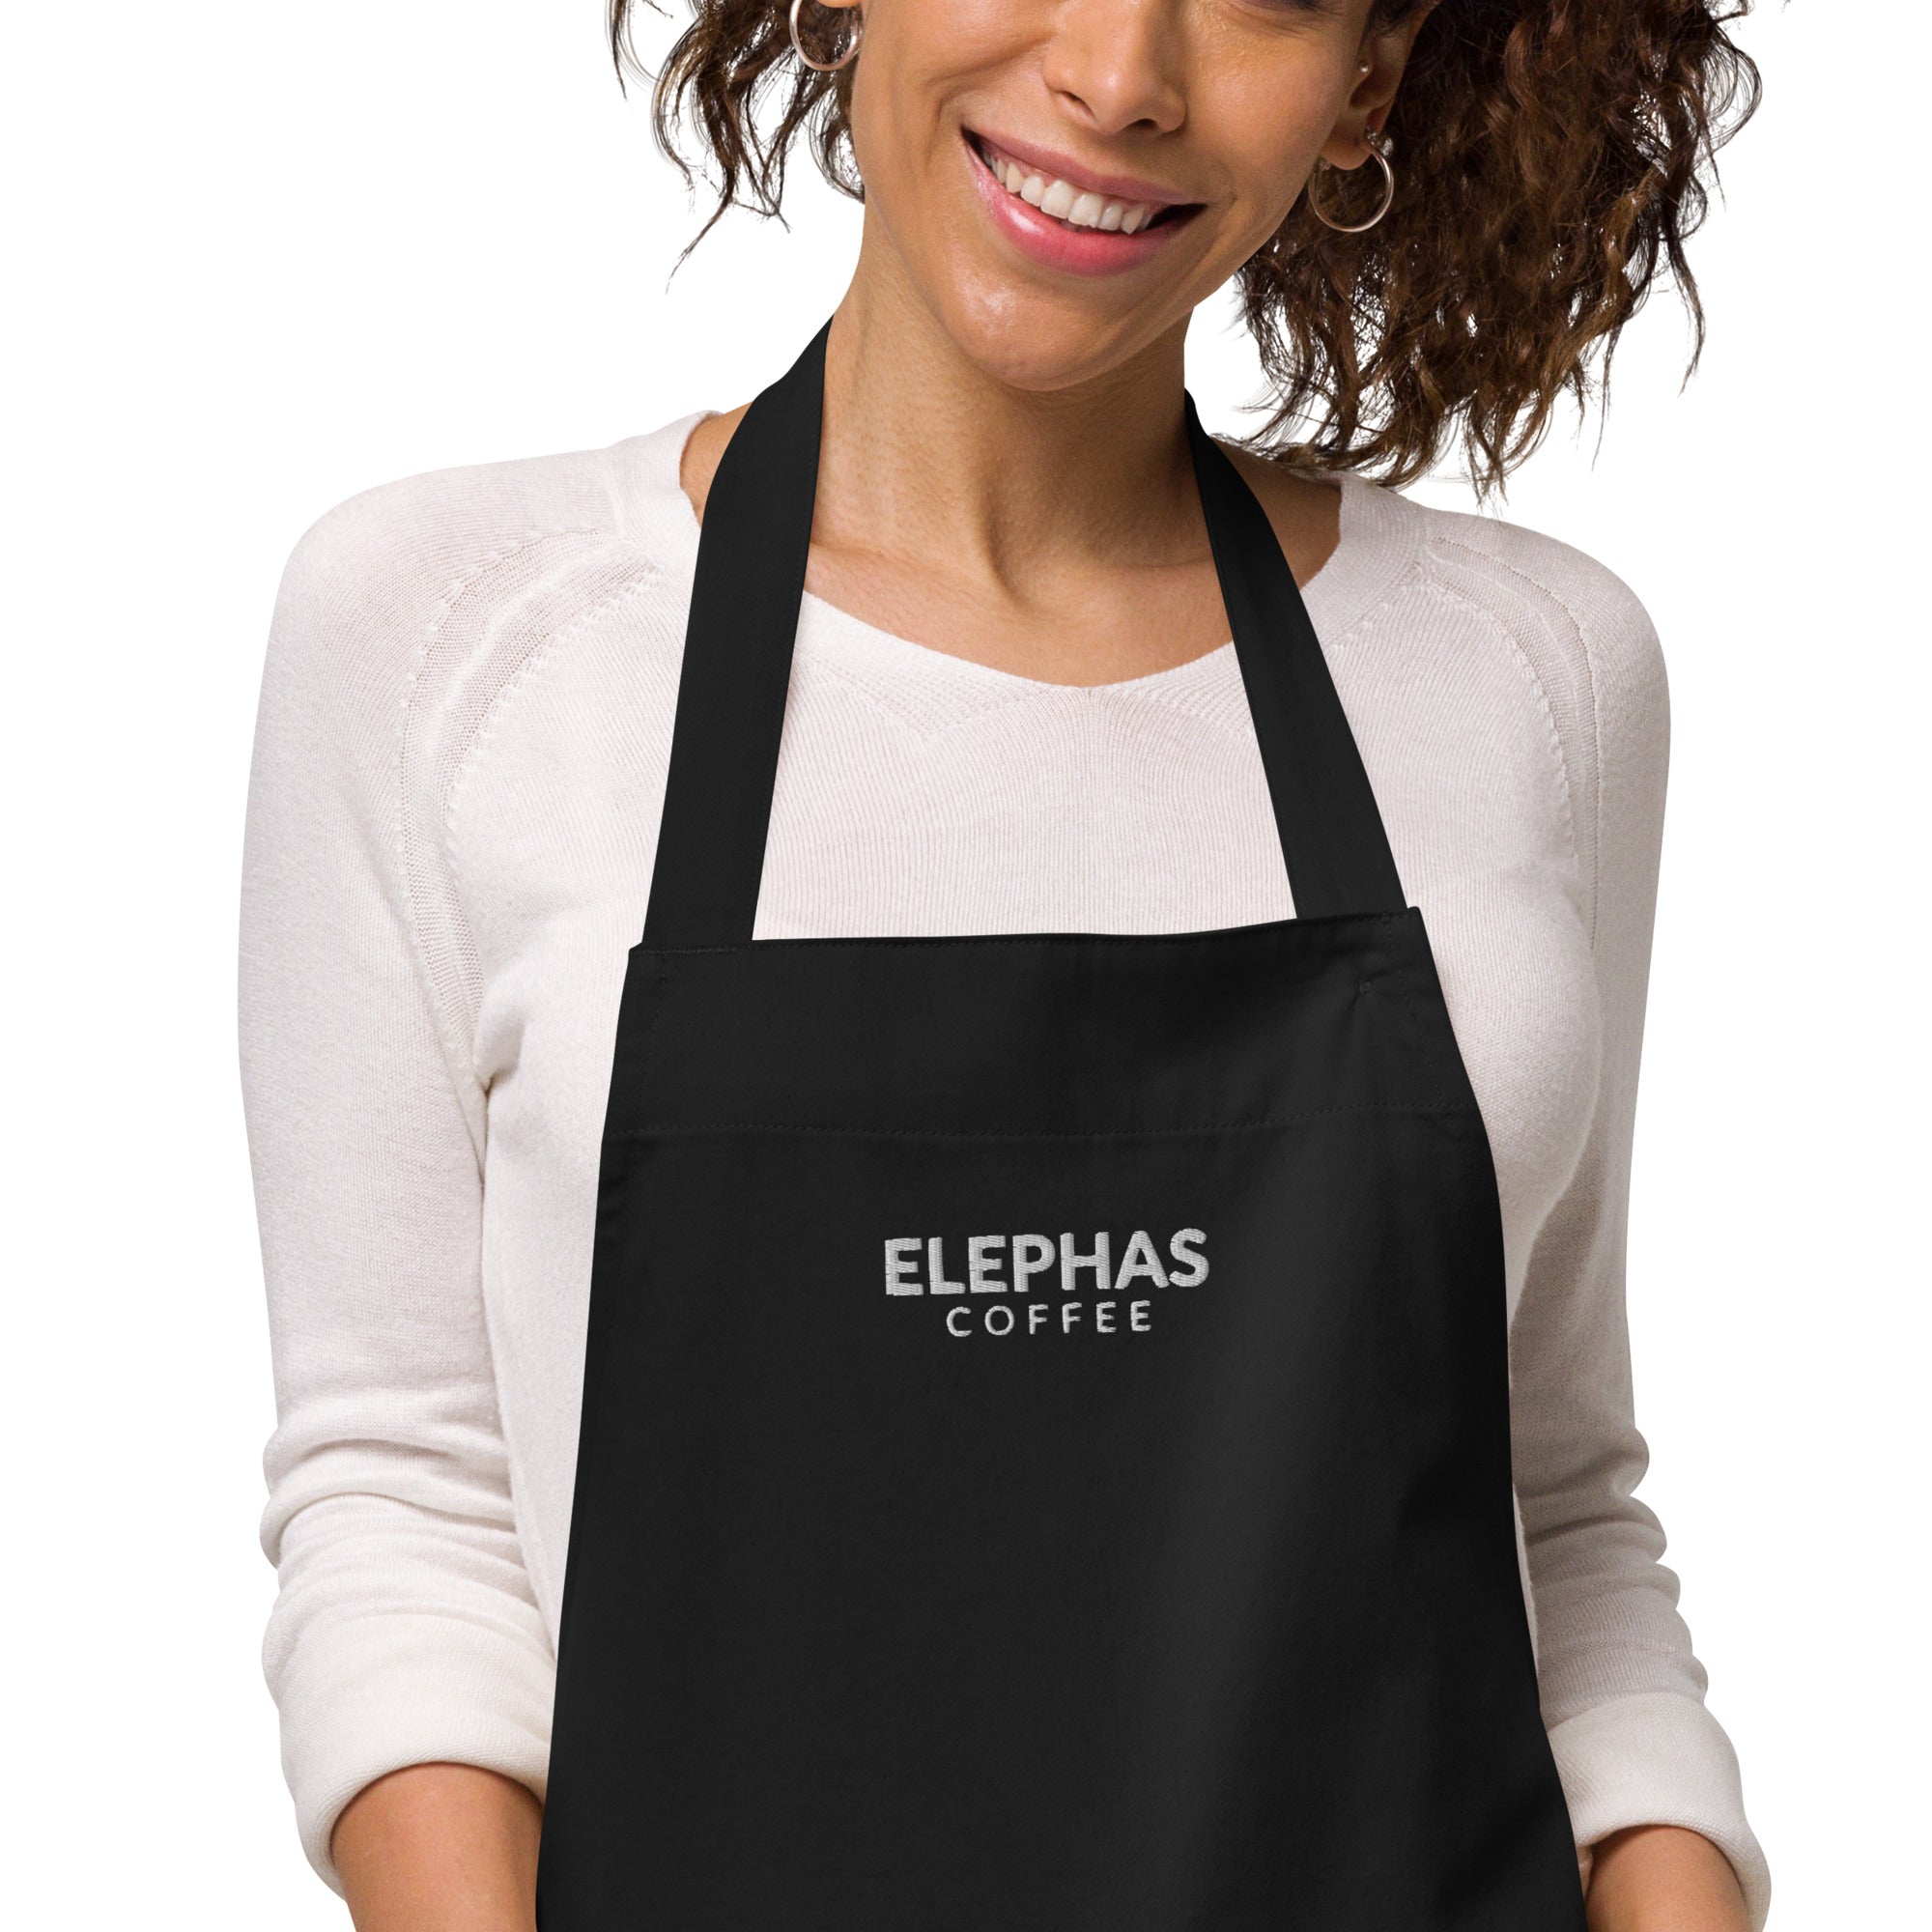 Elephas Coffee - All Caps - Organic Cotton Apron - Black